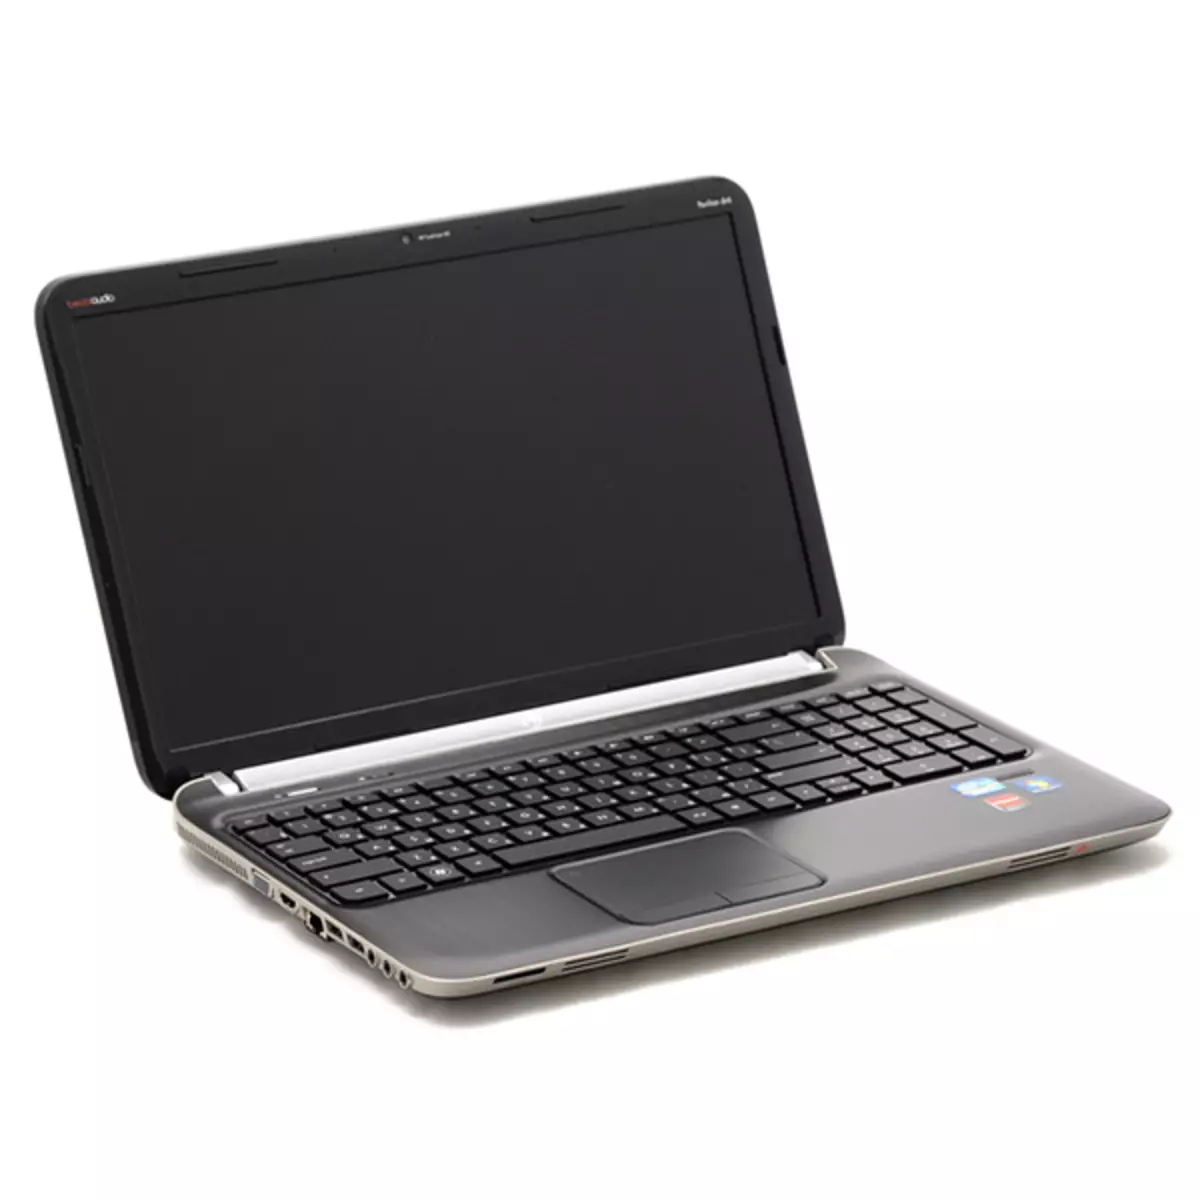 Preuzmite upravljačke programe za HP Pavilion DV6 laptop